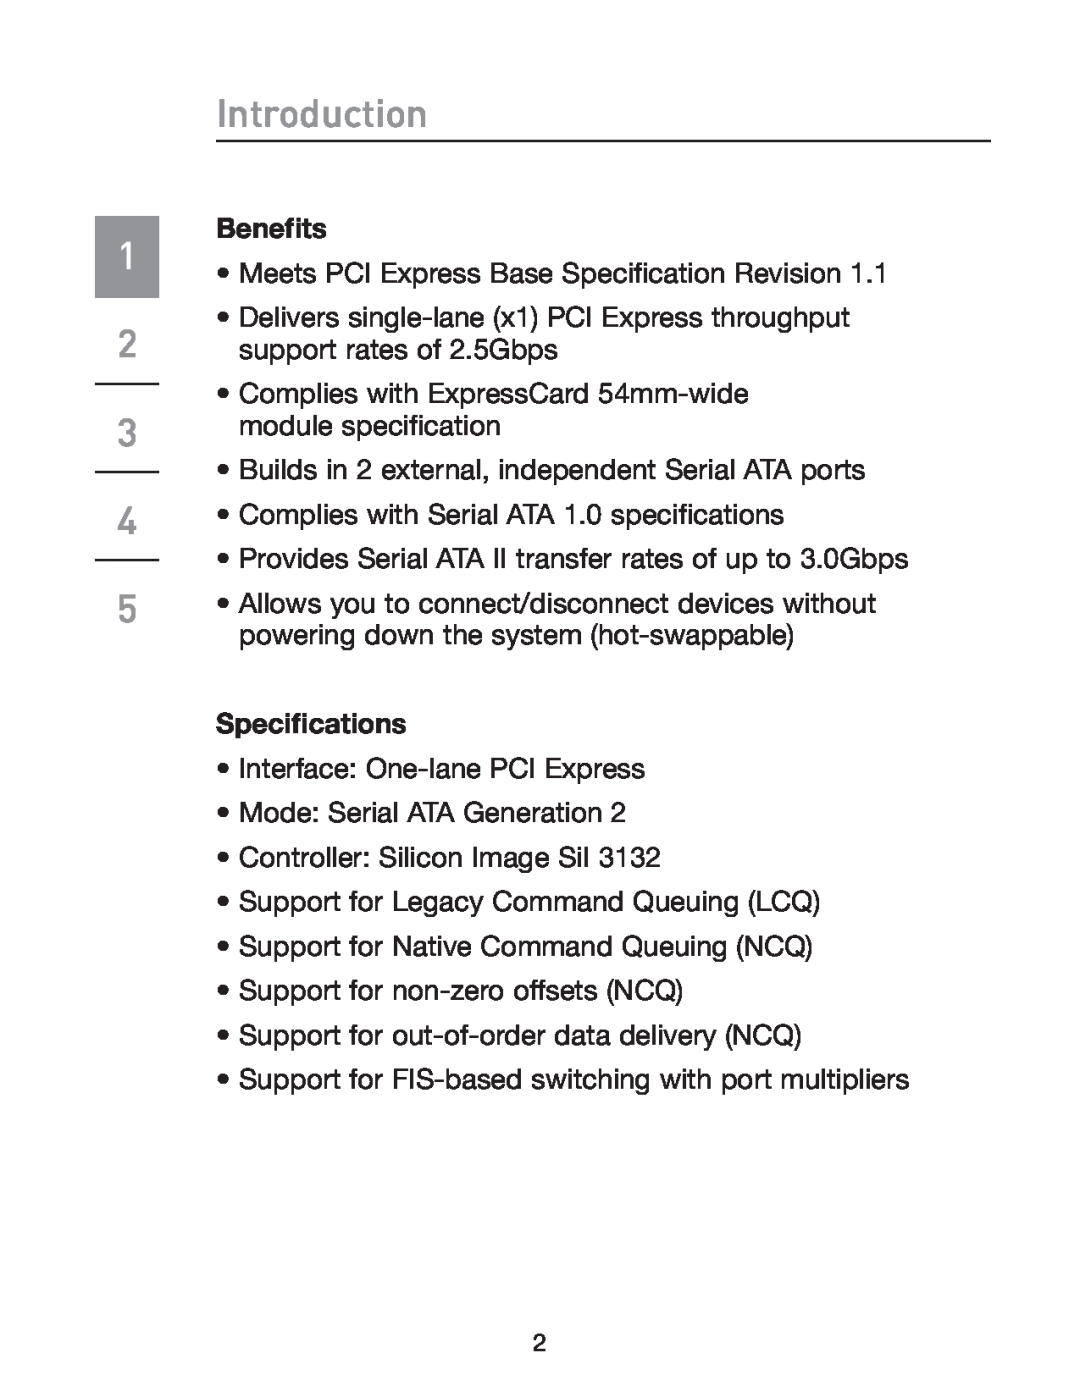 Belkin F5U239 manual Introduction, Benefits, Specifications 